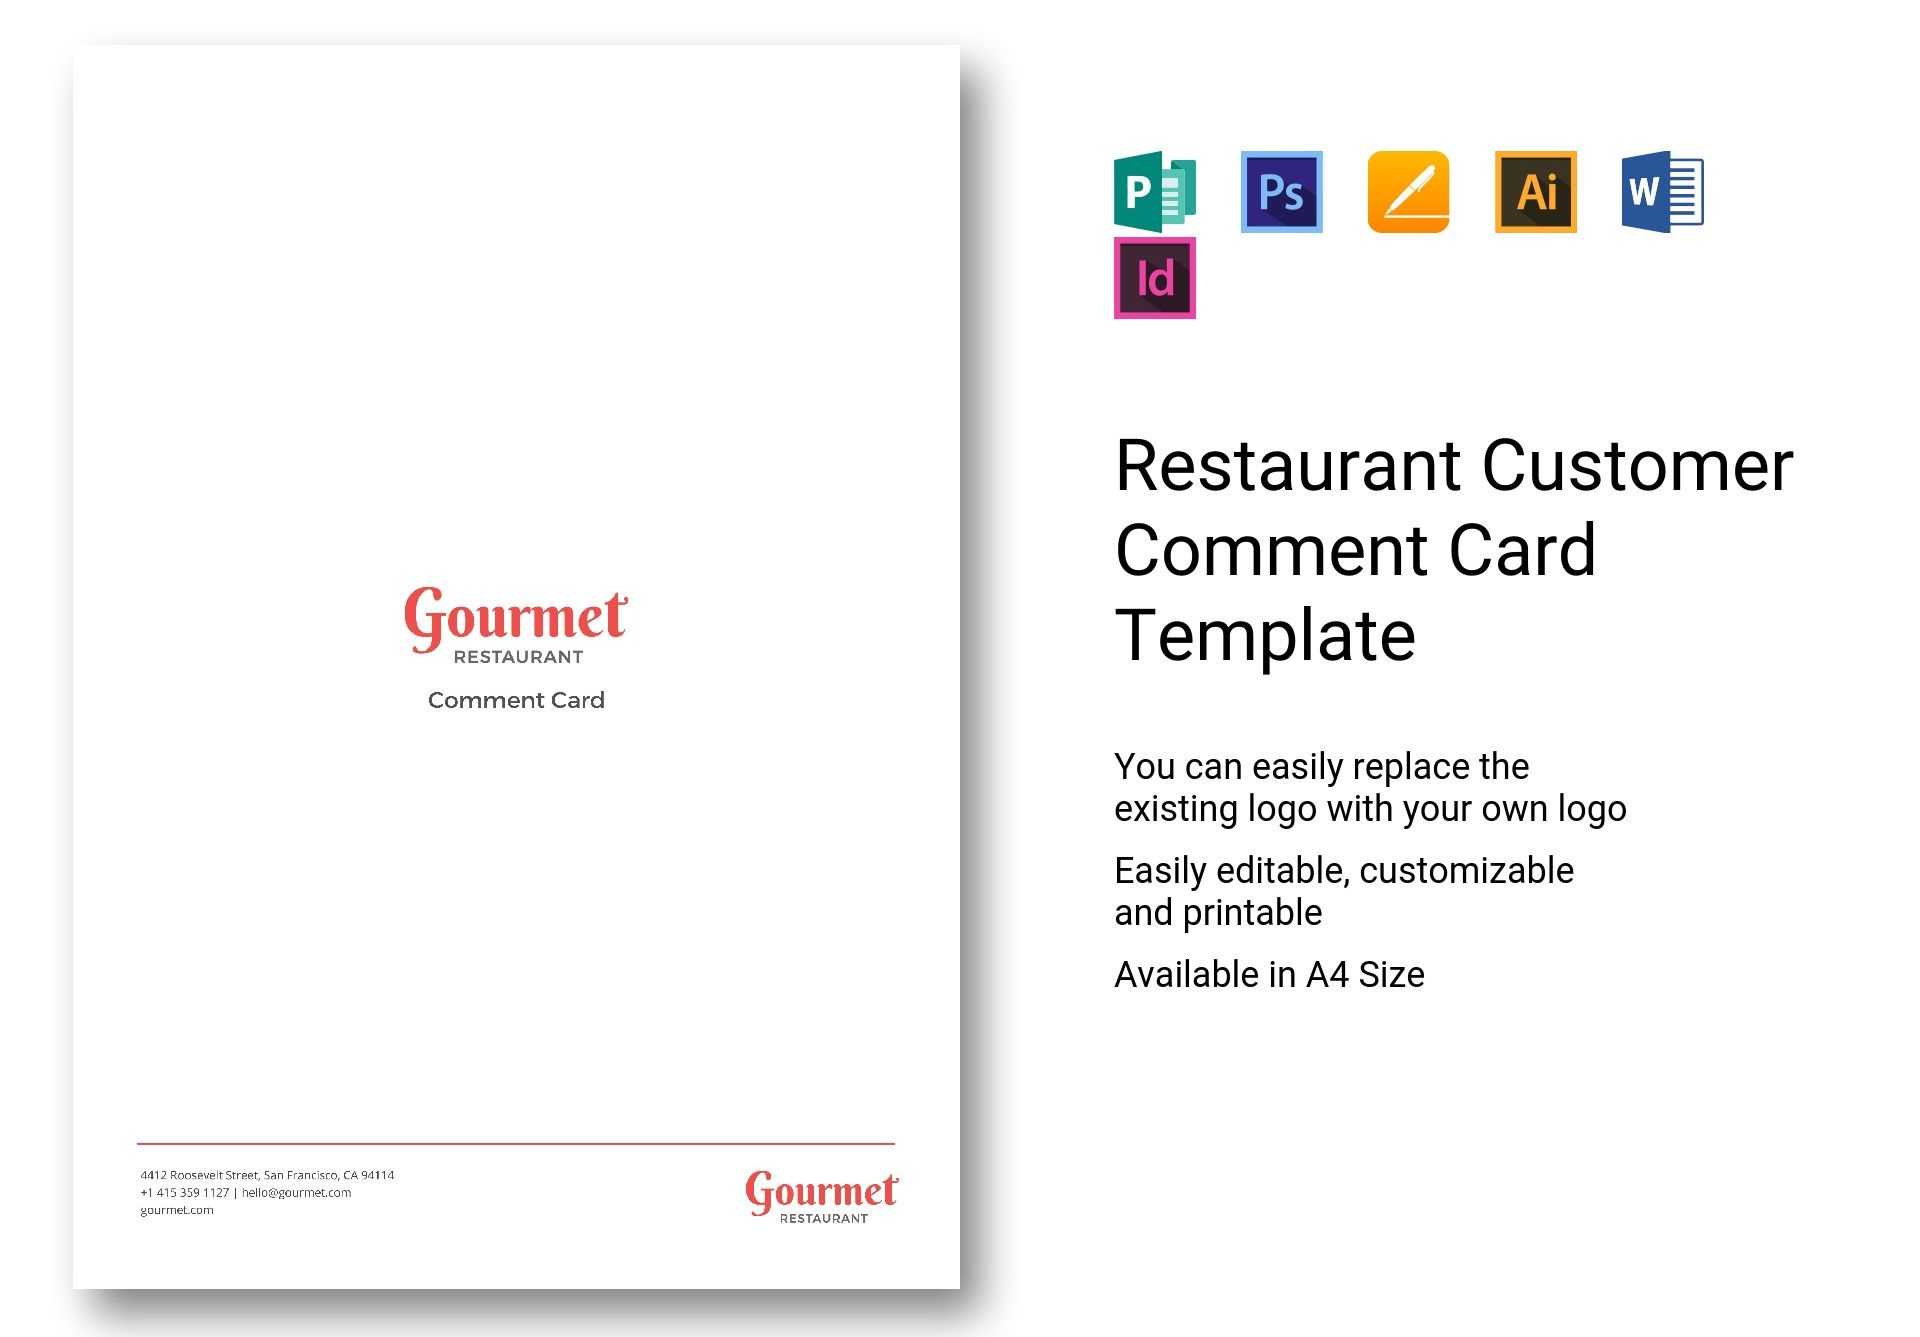 006 Restaurant Customer Comment Card Template Frightening With Regard To Restaurant Comment Card Template